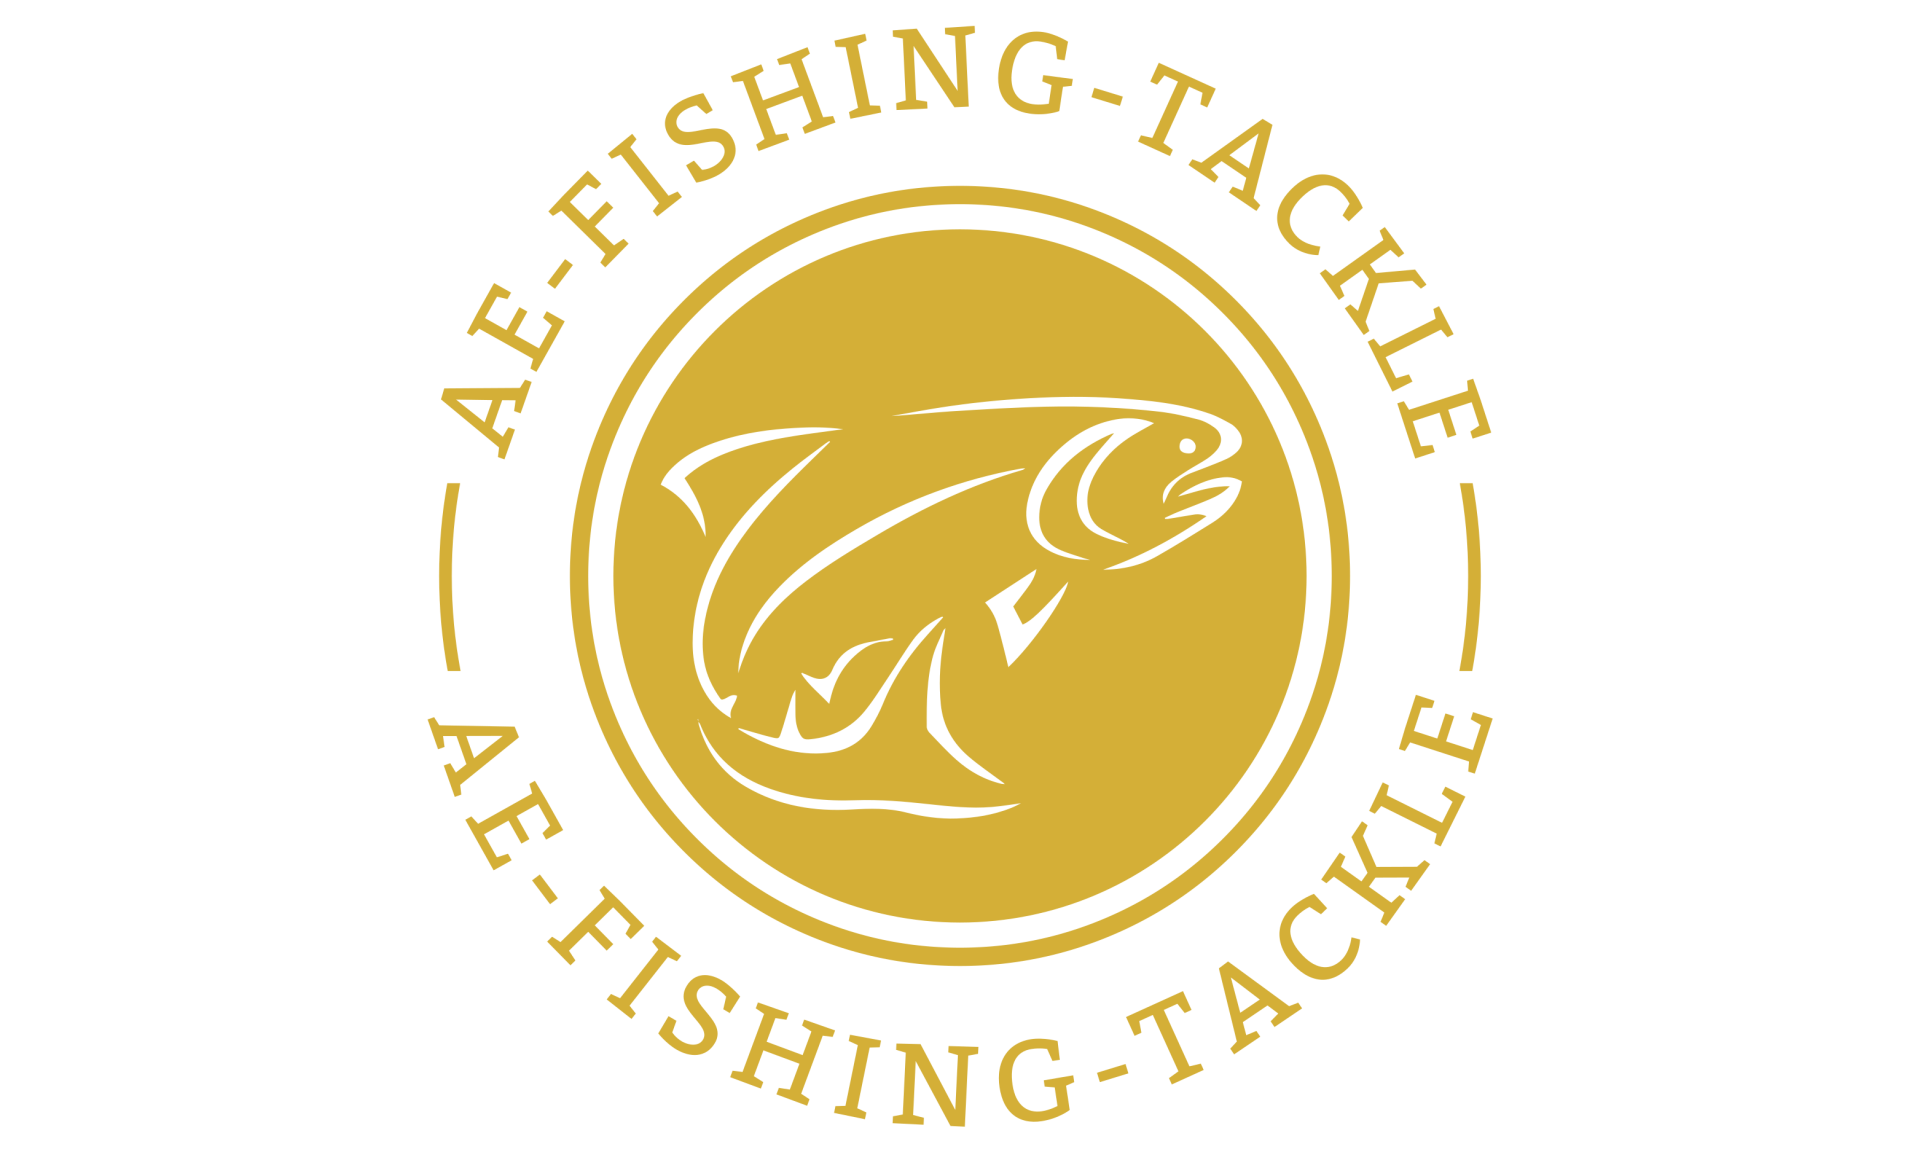 AE-FISHING-TACKLE